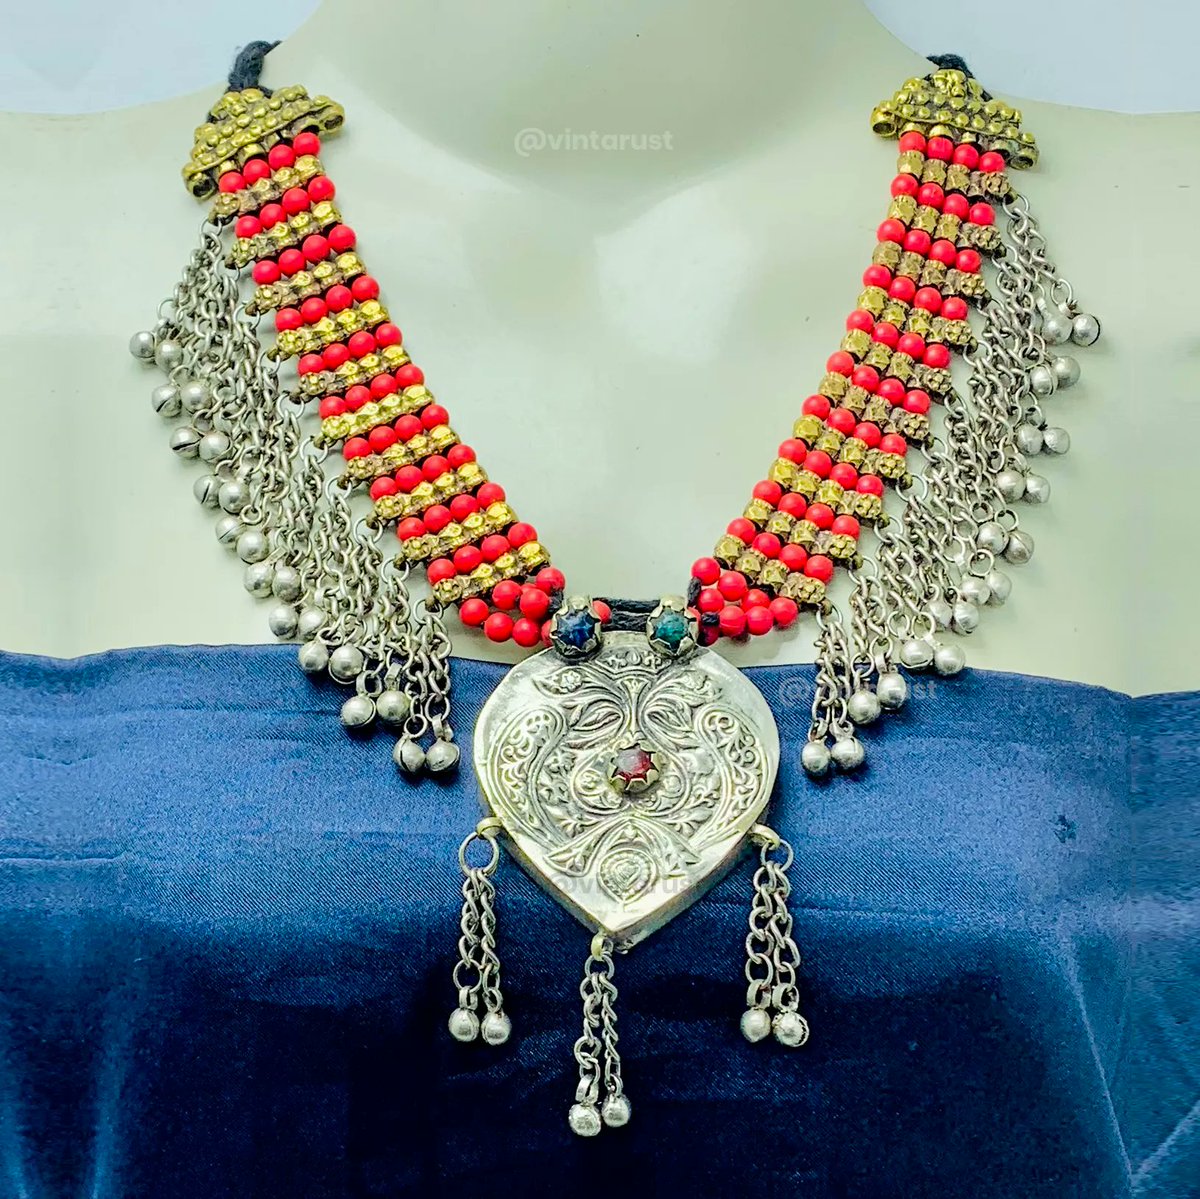 Beaded Chain Necklace With Silver Pendant. 

Shop Now:
buff.ly/42yBXwd

#multilayernecklace #redbeadedchain #handmadejewelry #tribalornament #statementnecklace #versatileaccessory #bohemianstyle #chiclook #silverchain #elegantaccessory #vintarust #fashion #jewelry #trendy